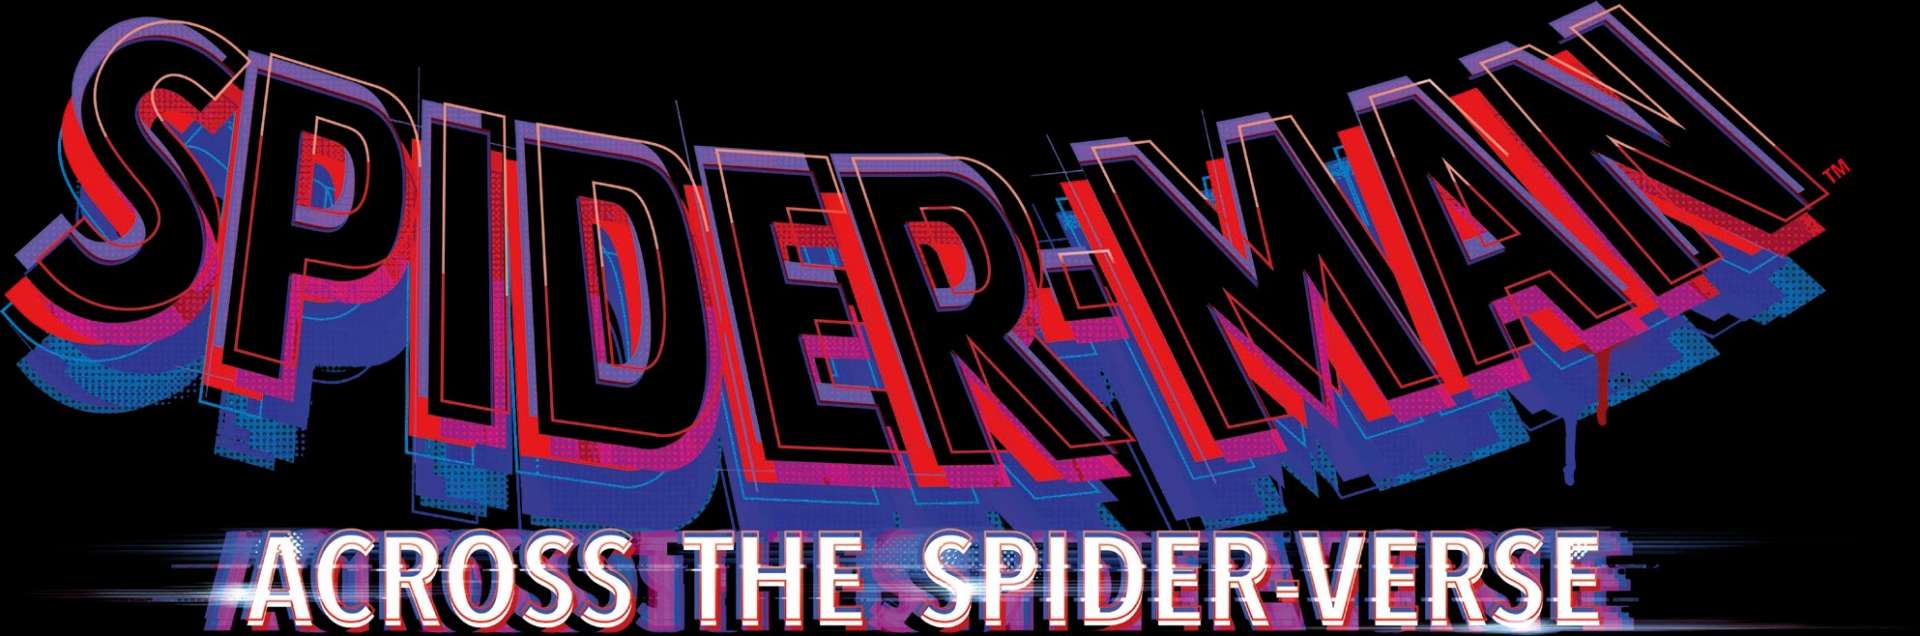 Spider-man Across the spider verse